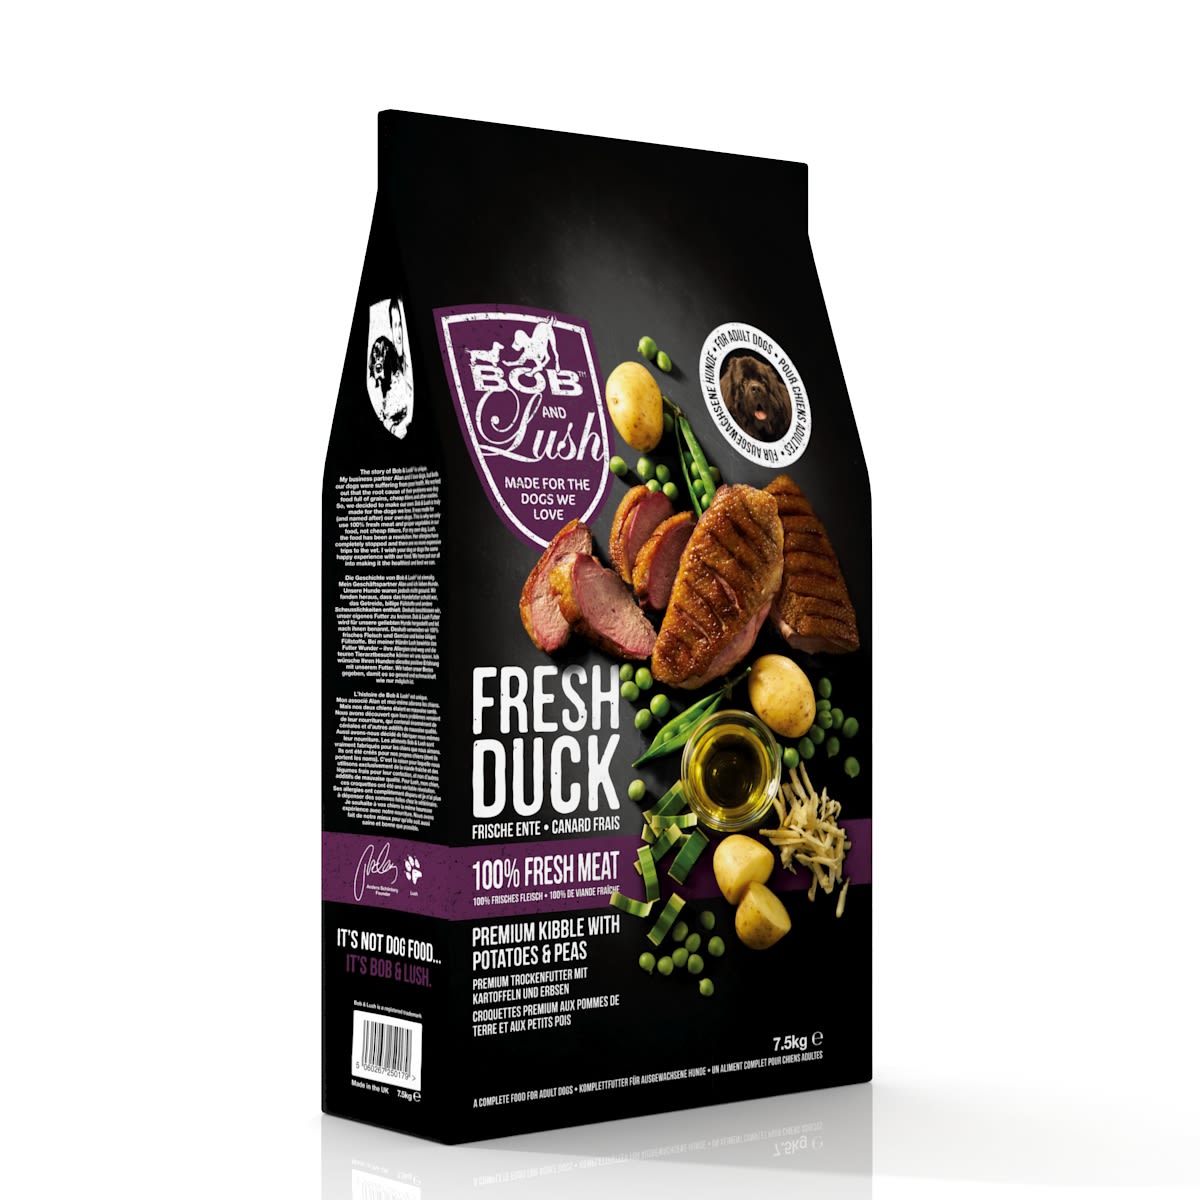 Bob & Lush Grain-Free Dry Adult Dog Food- Delicious 60% Duck Kibble